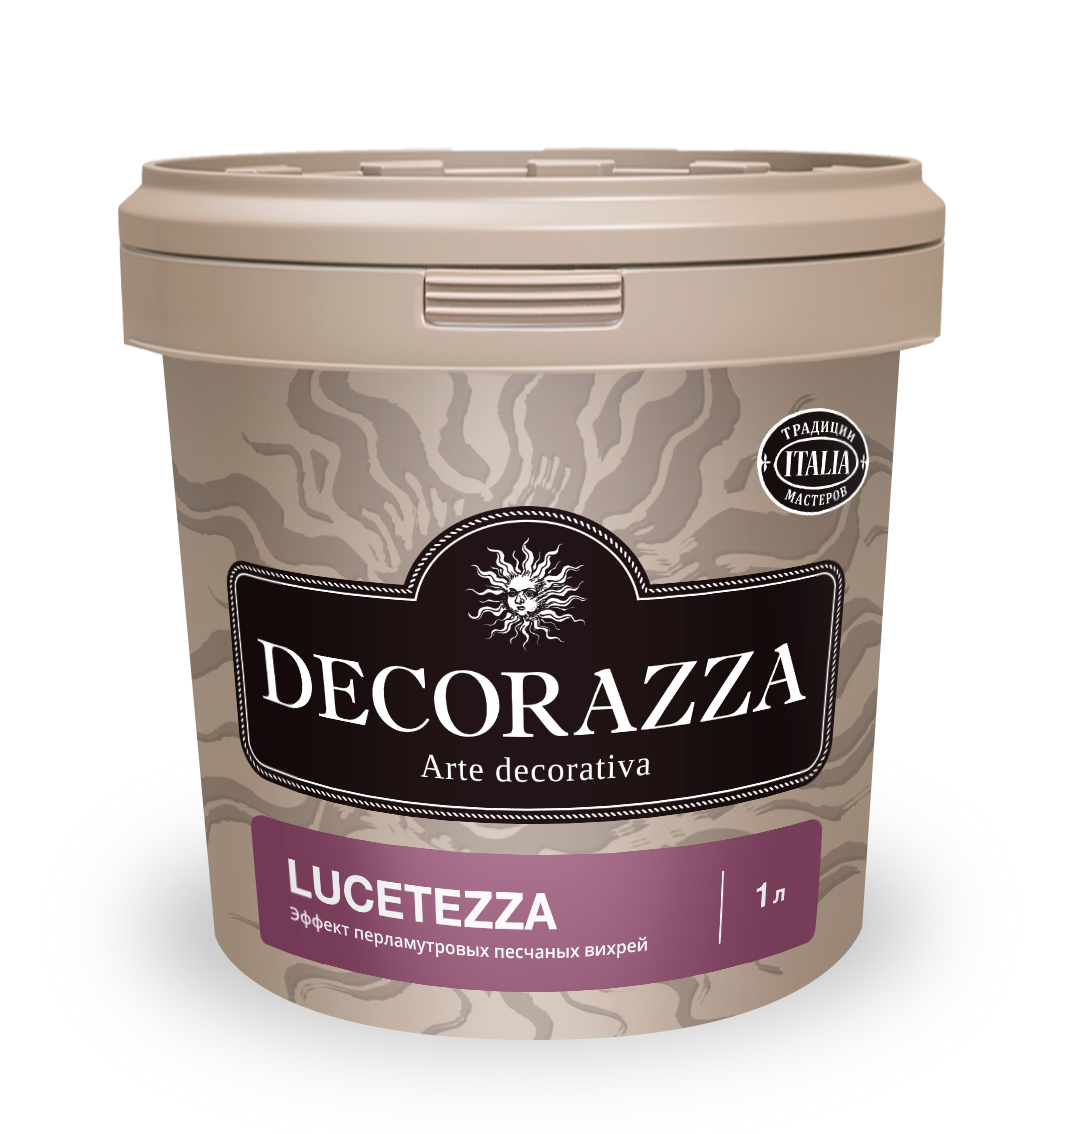 Декоративная штукатурка Decorazza Lucetezza Alluminio LC 700, 1 л декоративная краска decorazza